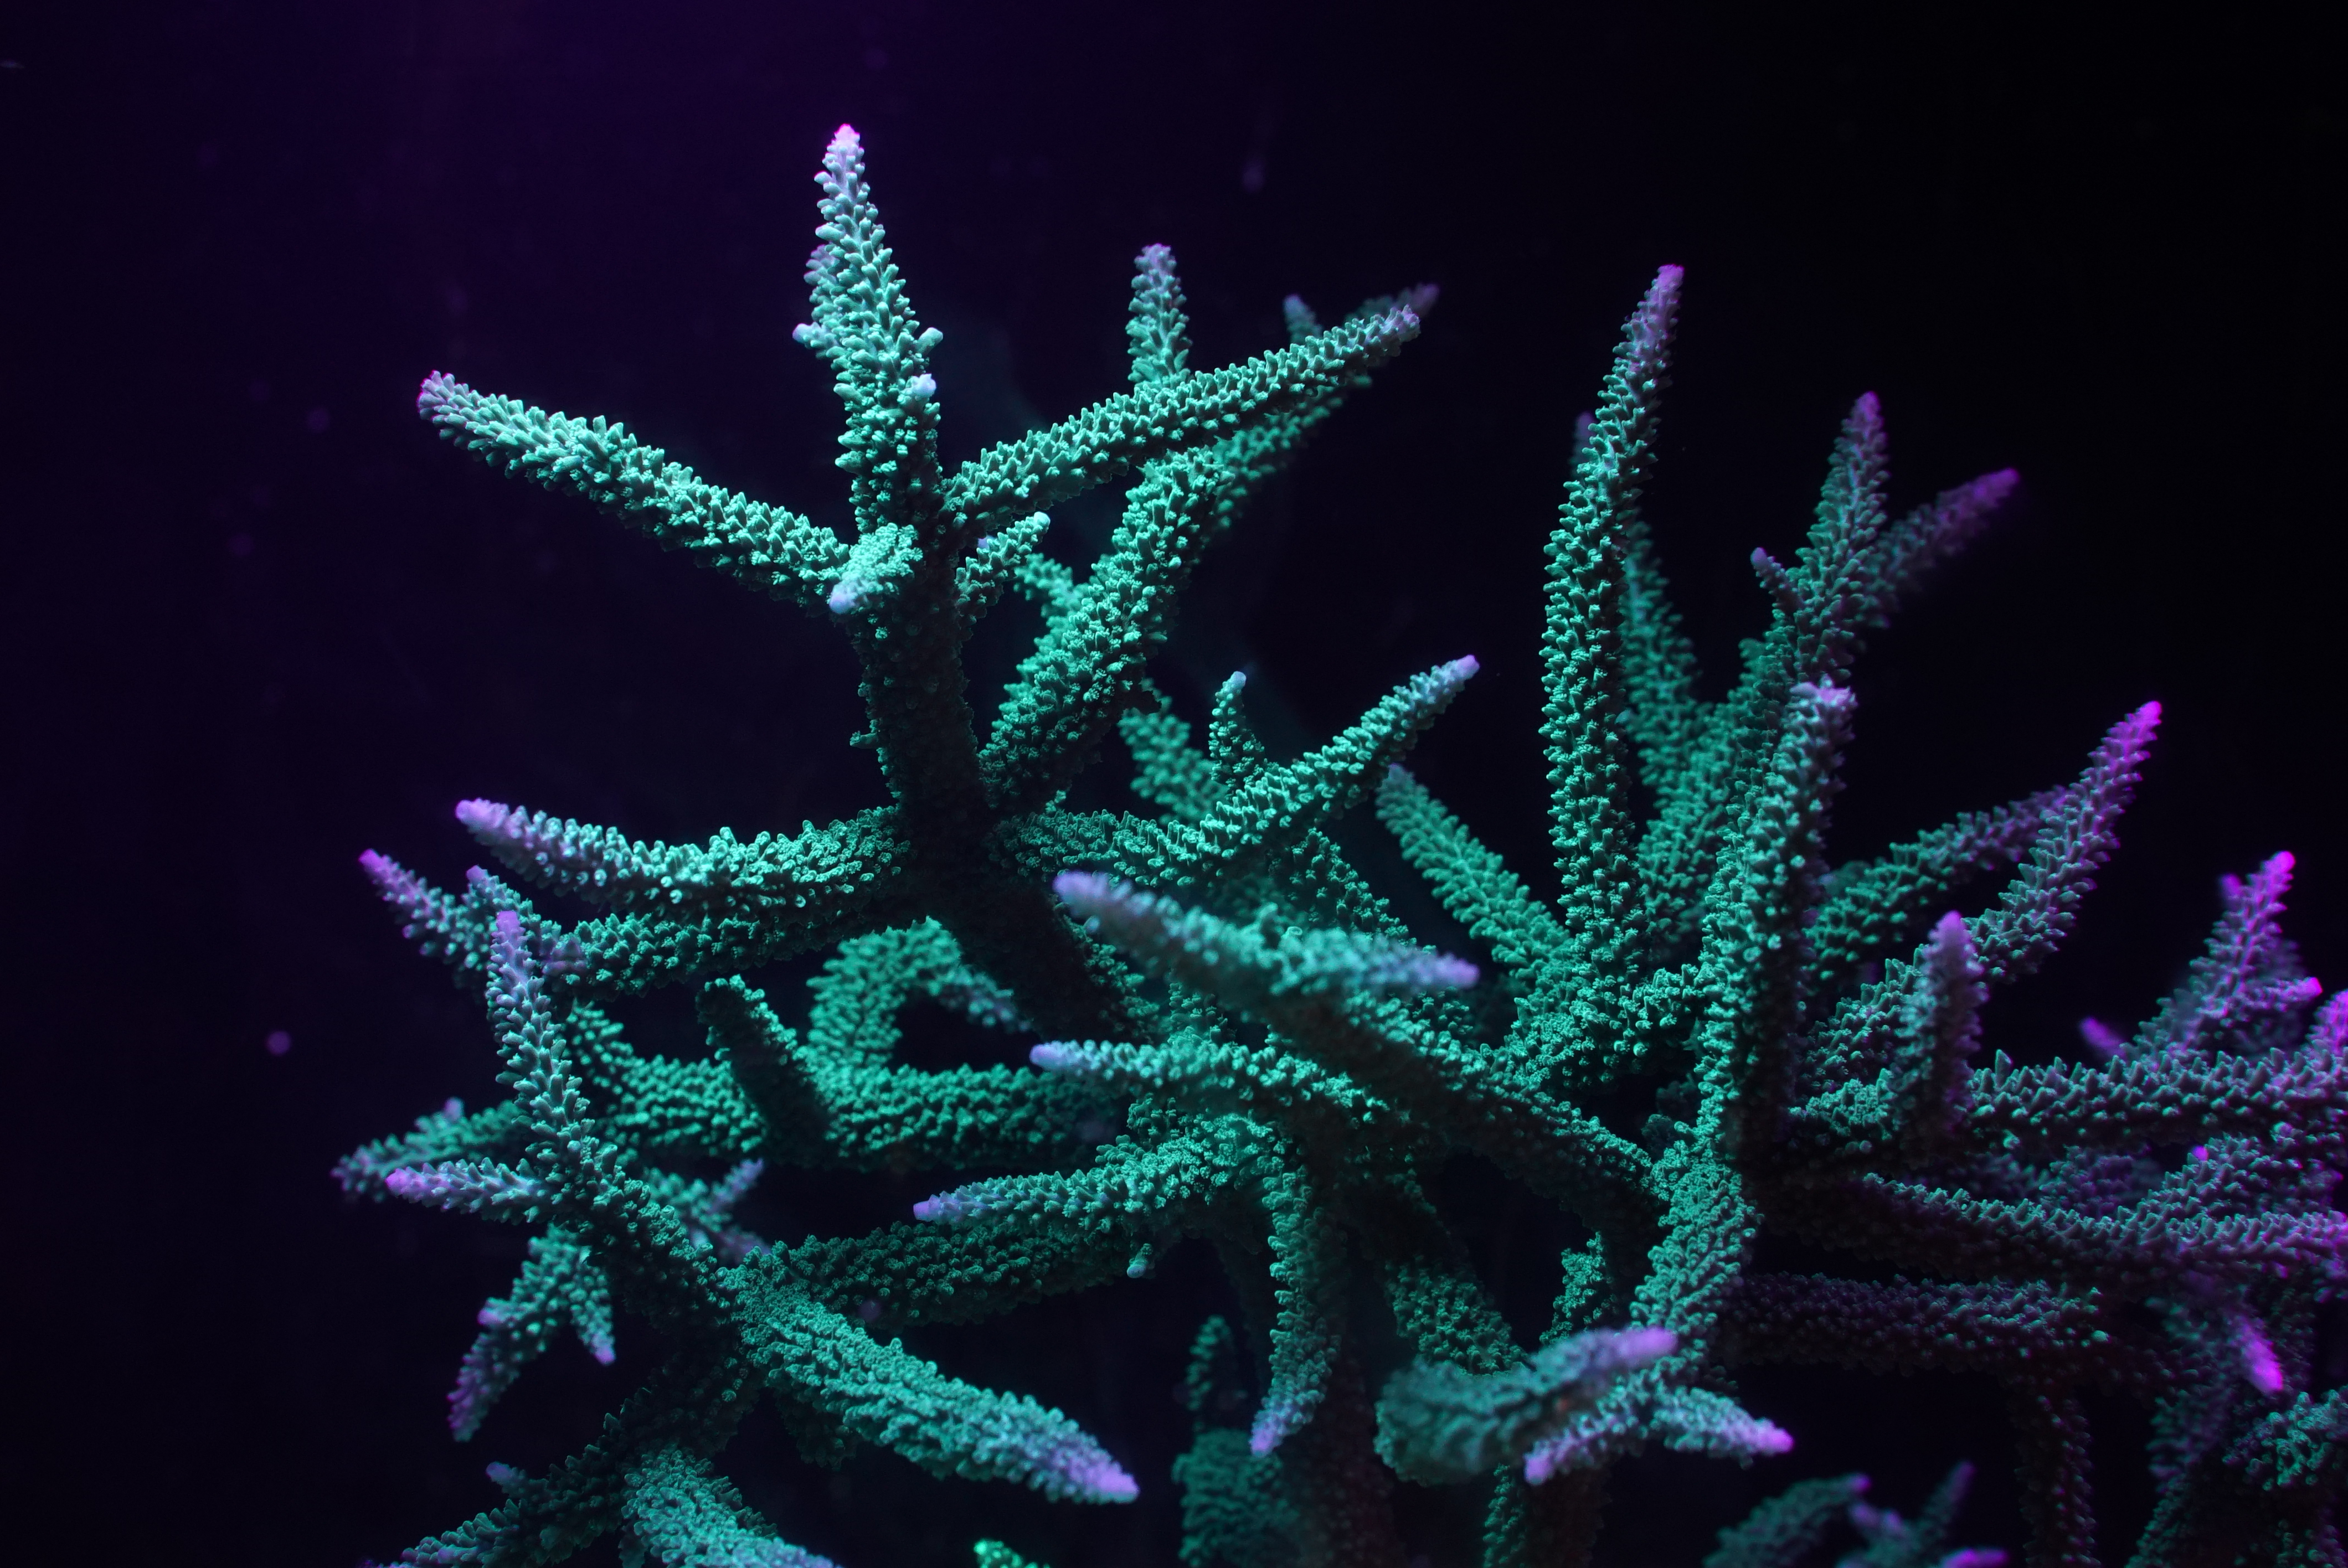 Staghorn coral, Churaumi Fish Encyclopedia